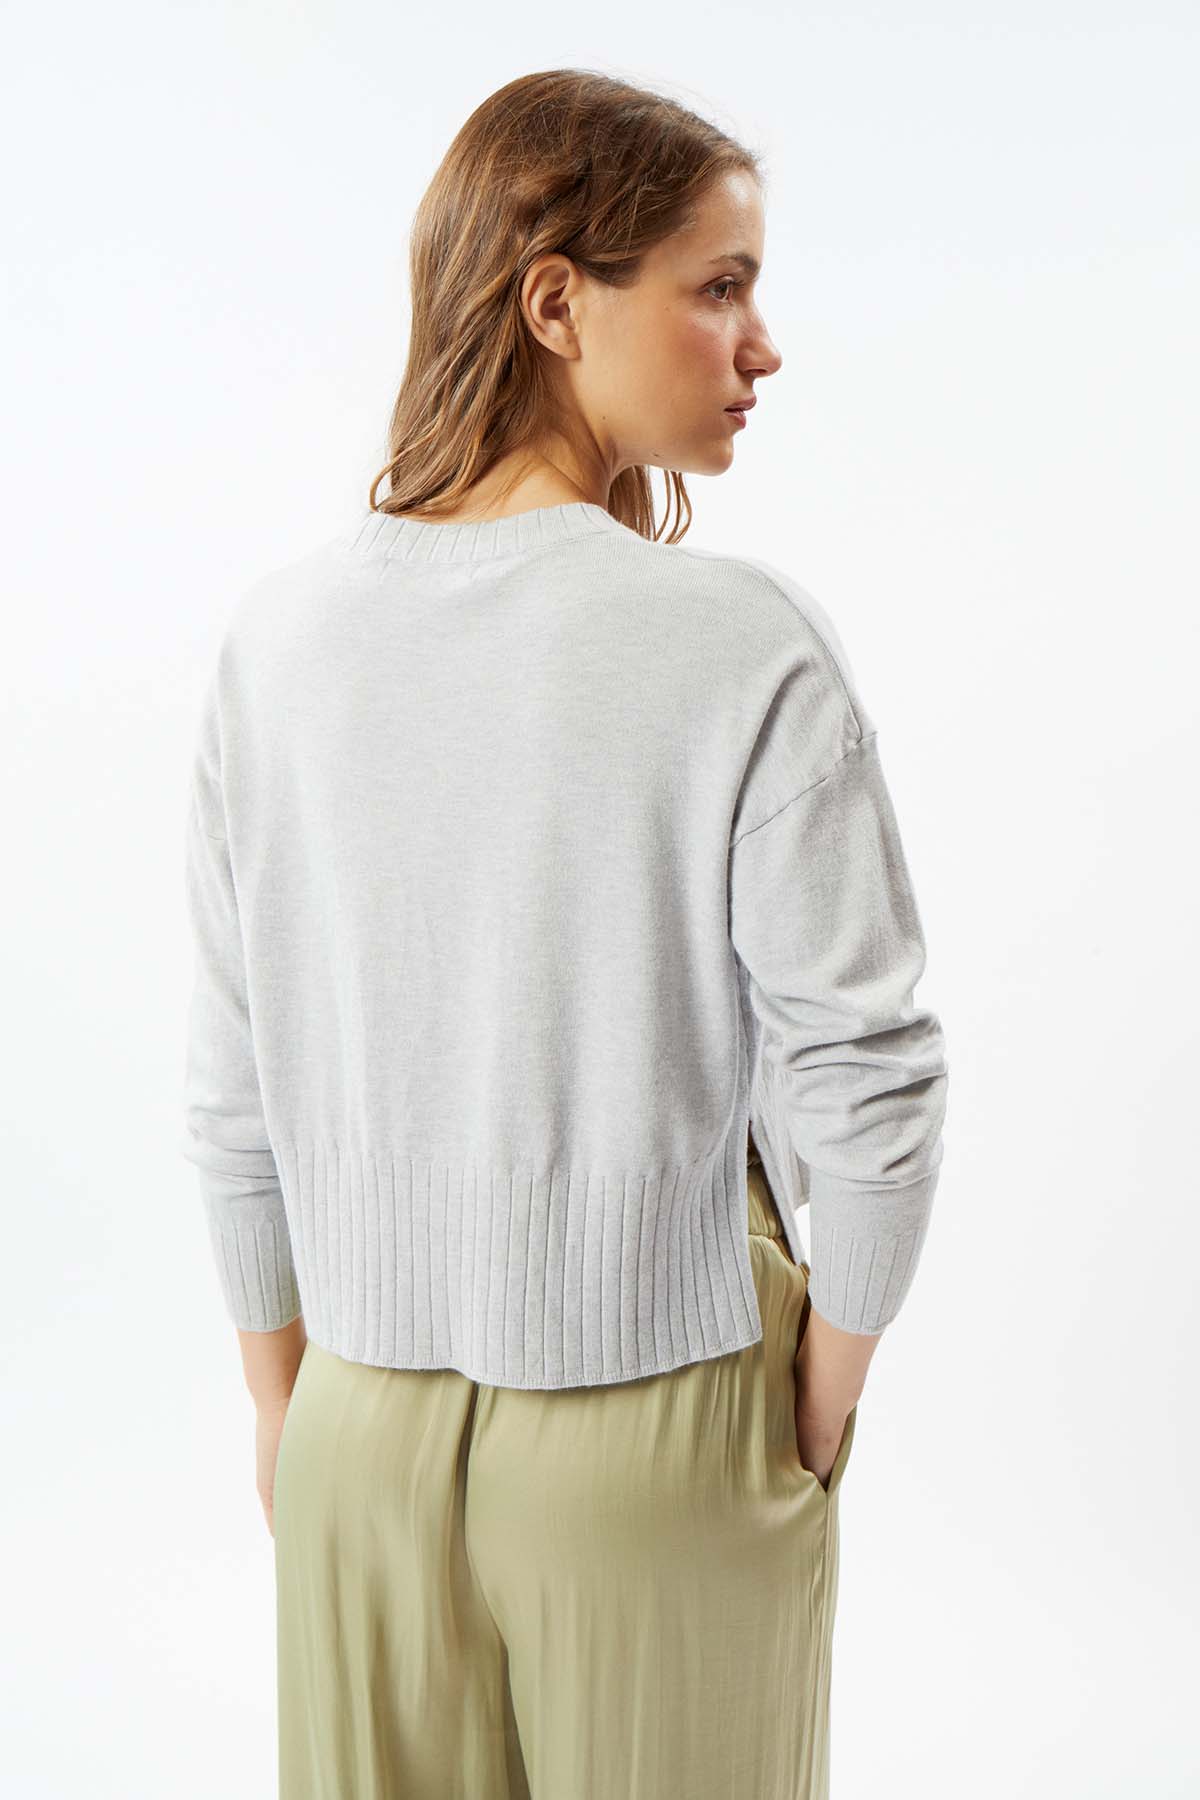 Deluc - Varo Sweater - Light Grey - Back